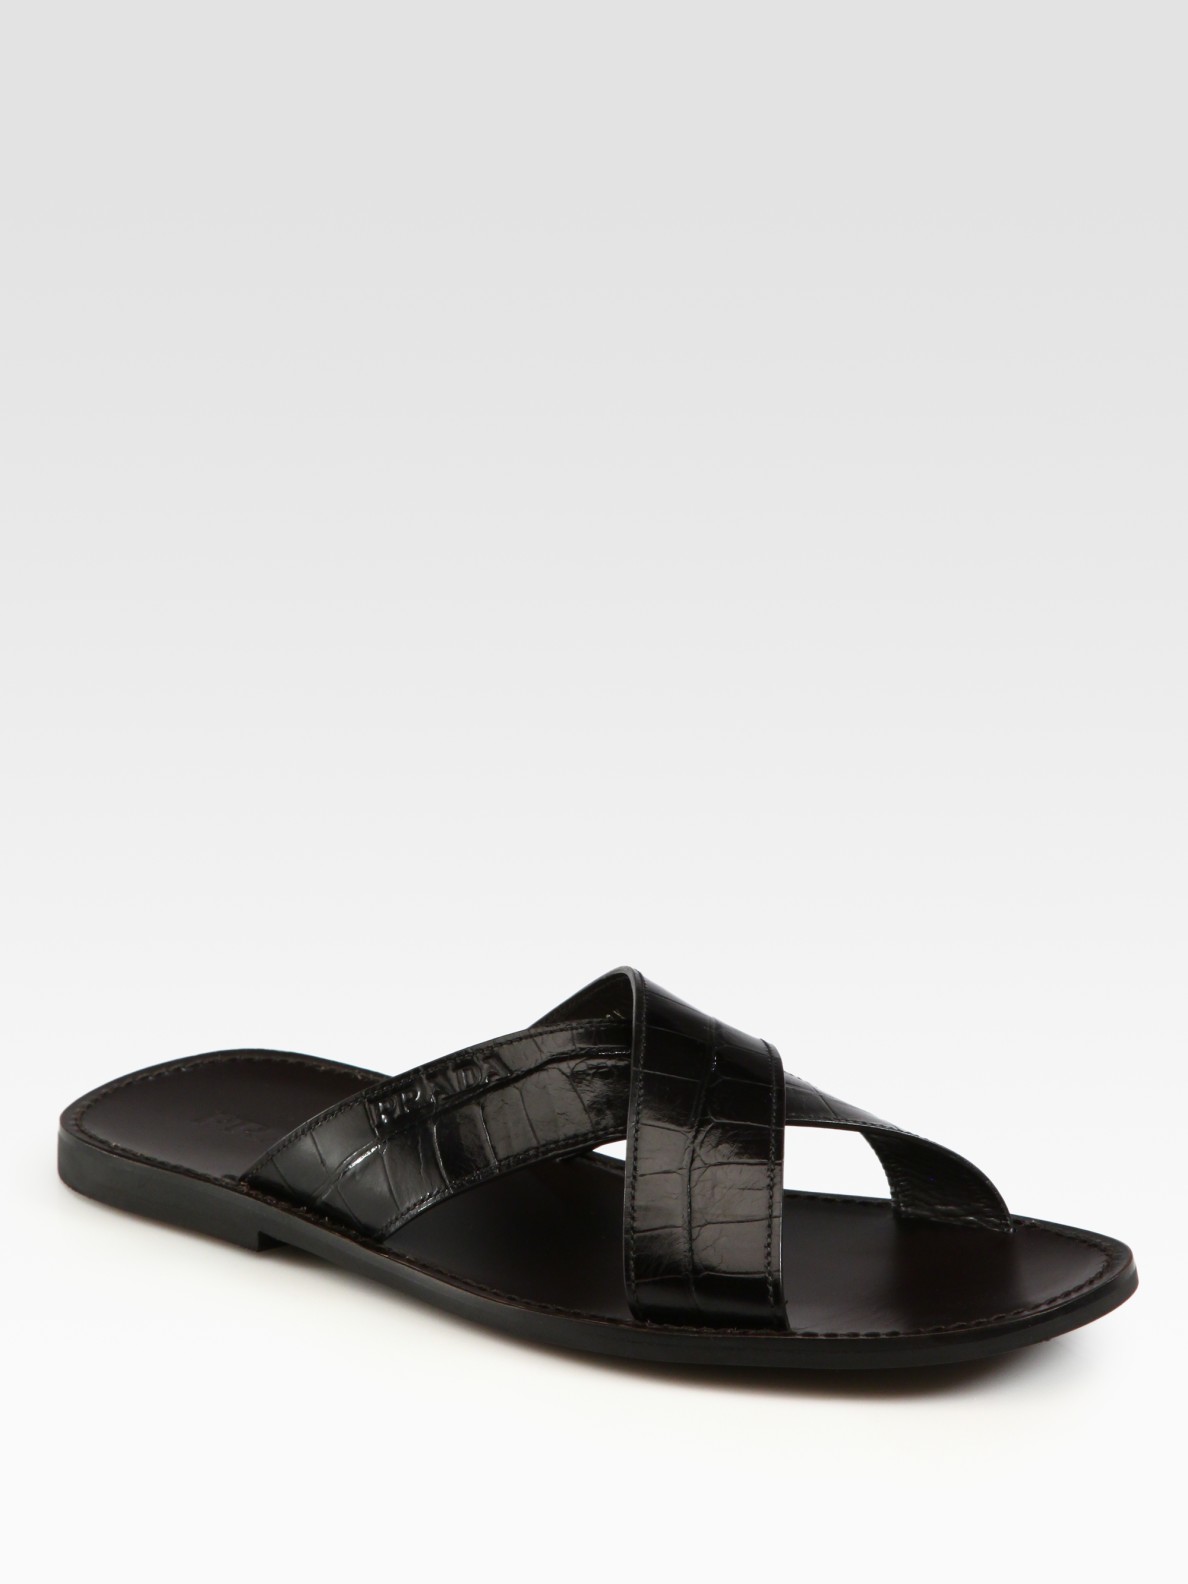 Prada Criss Cross Sandals in Black for 